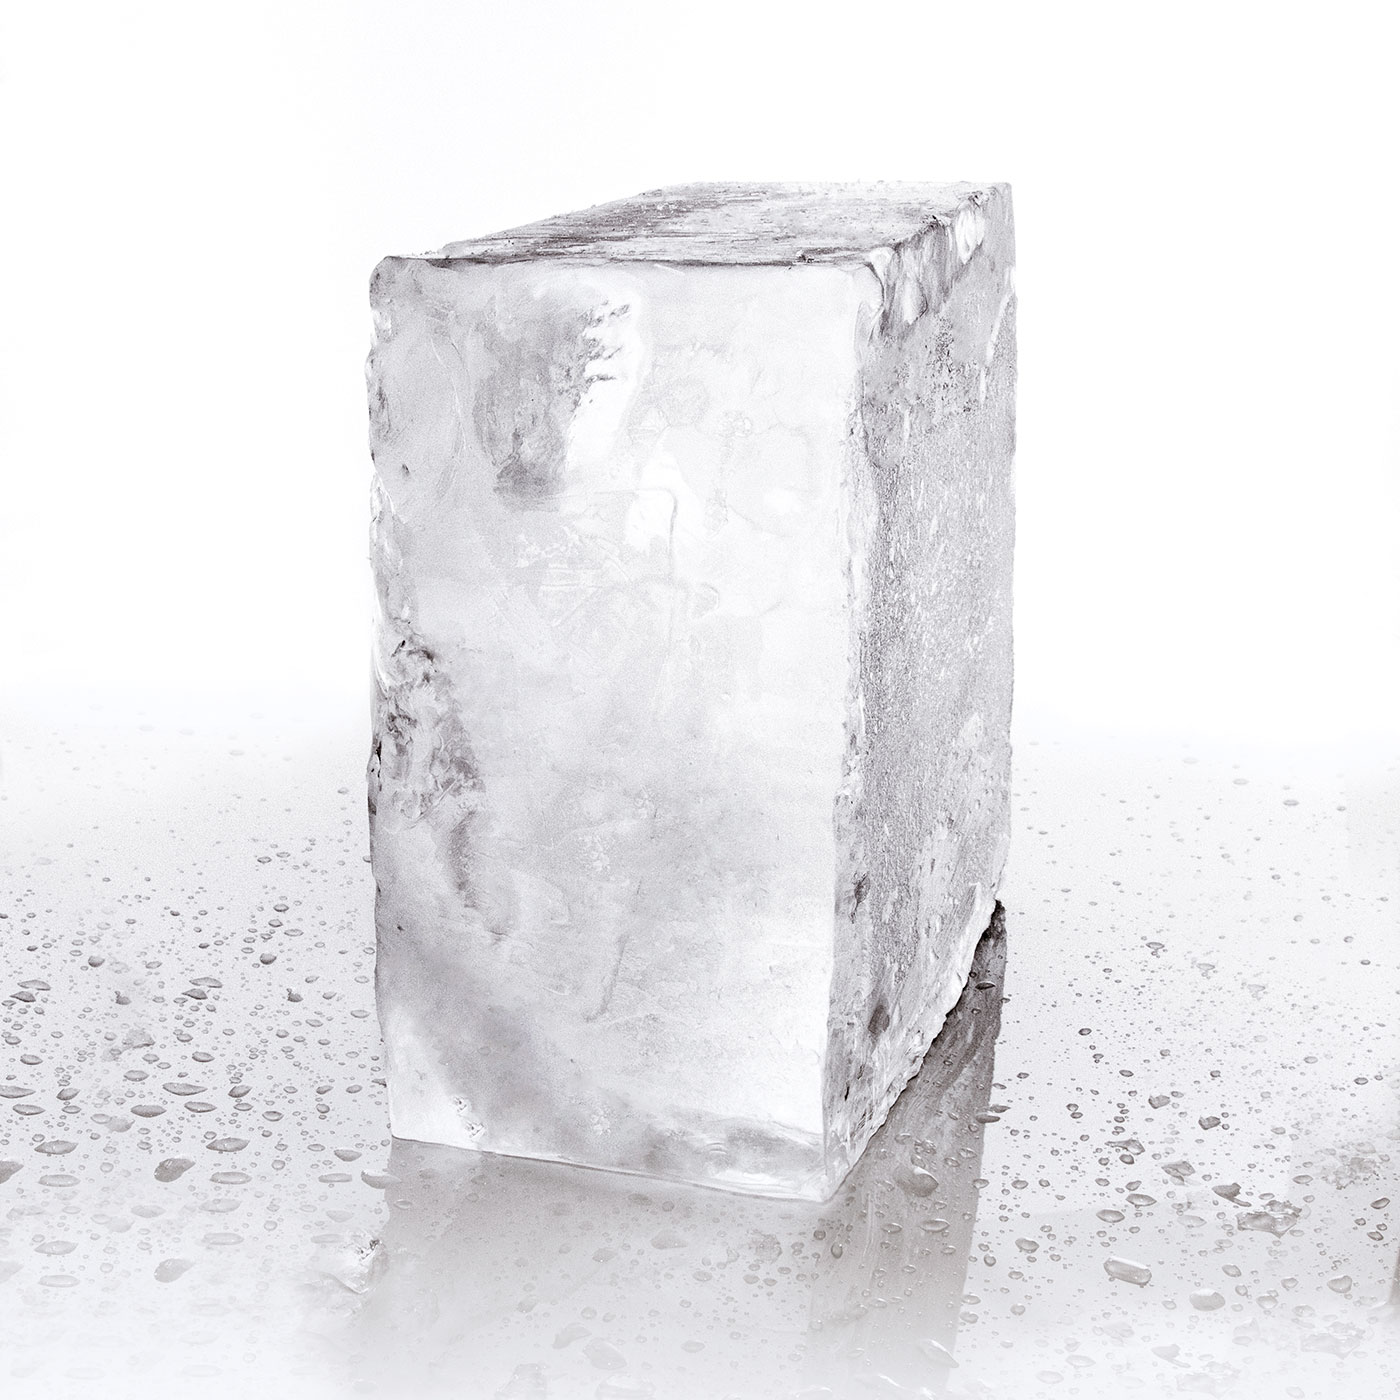 The Splurge: Big Ice Cubes